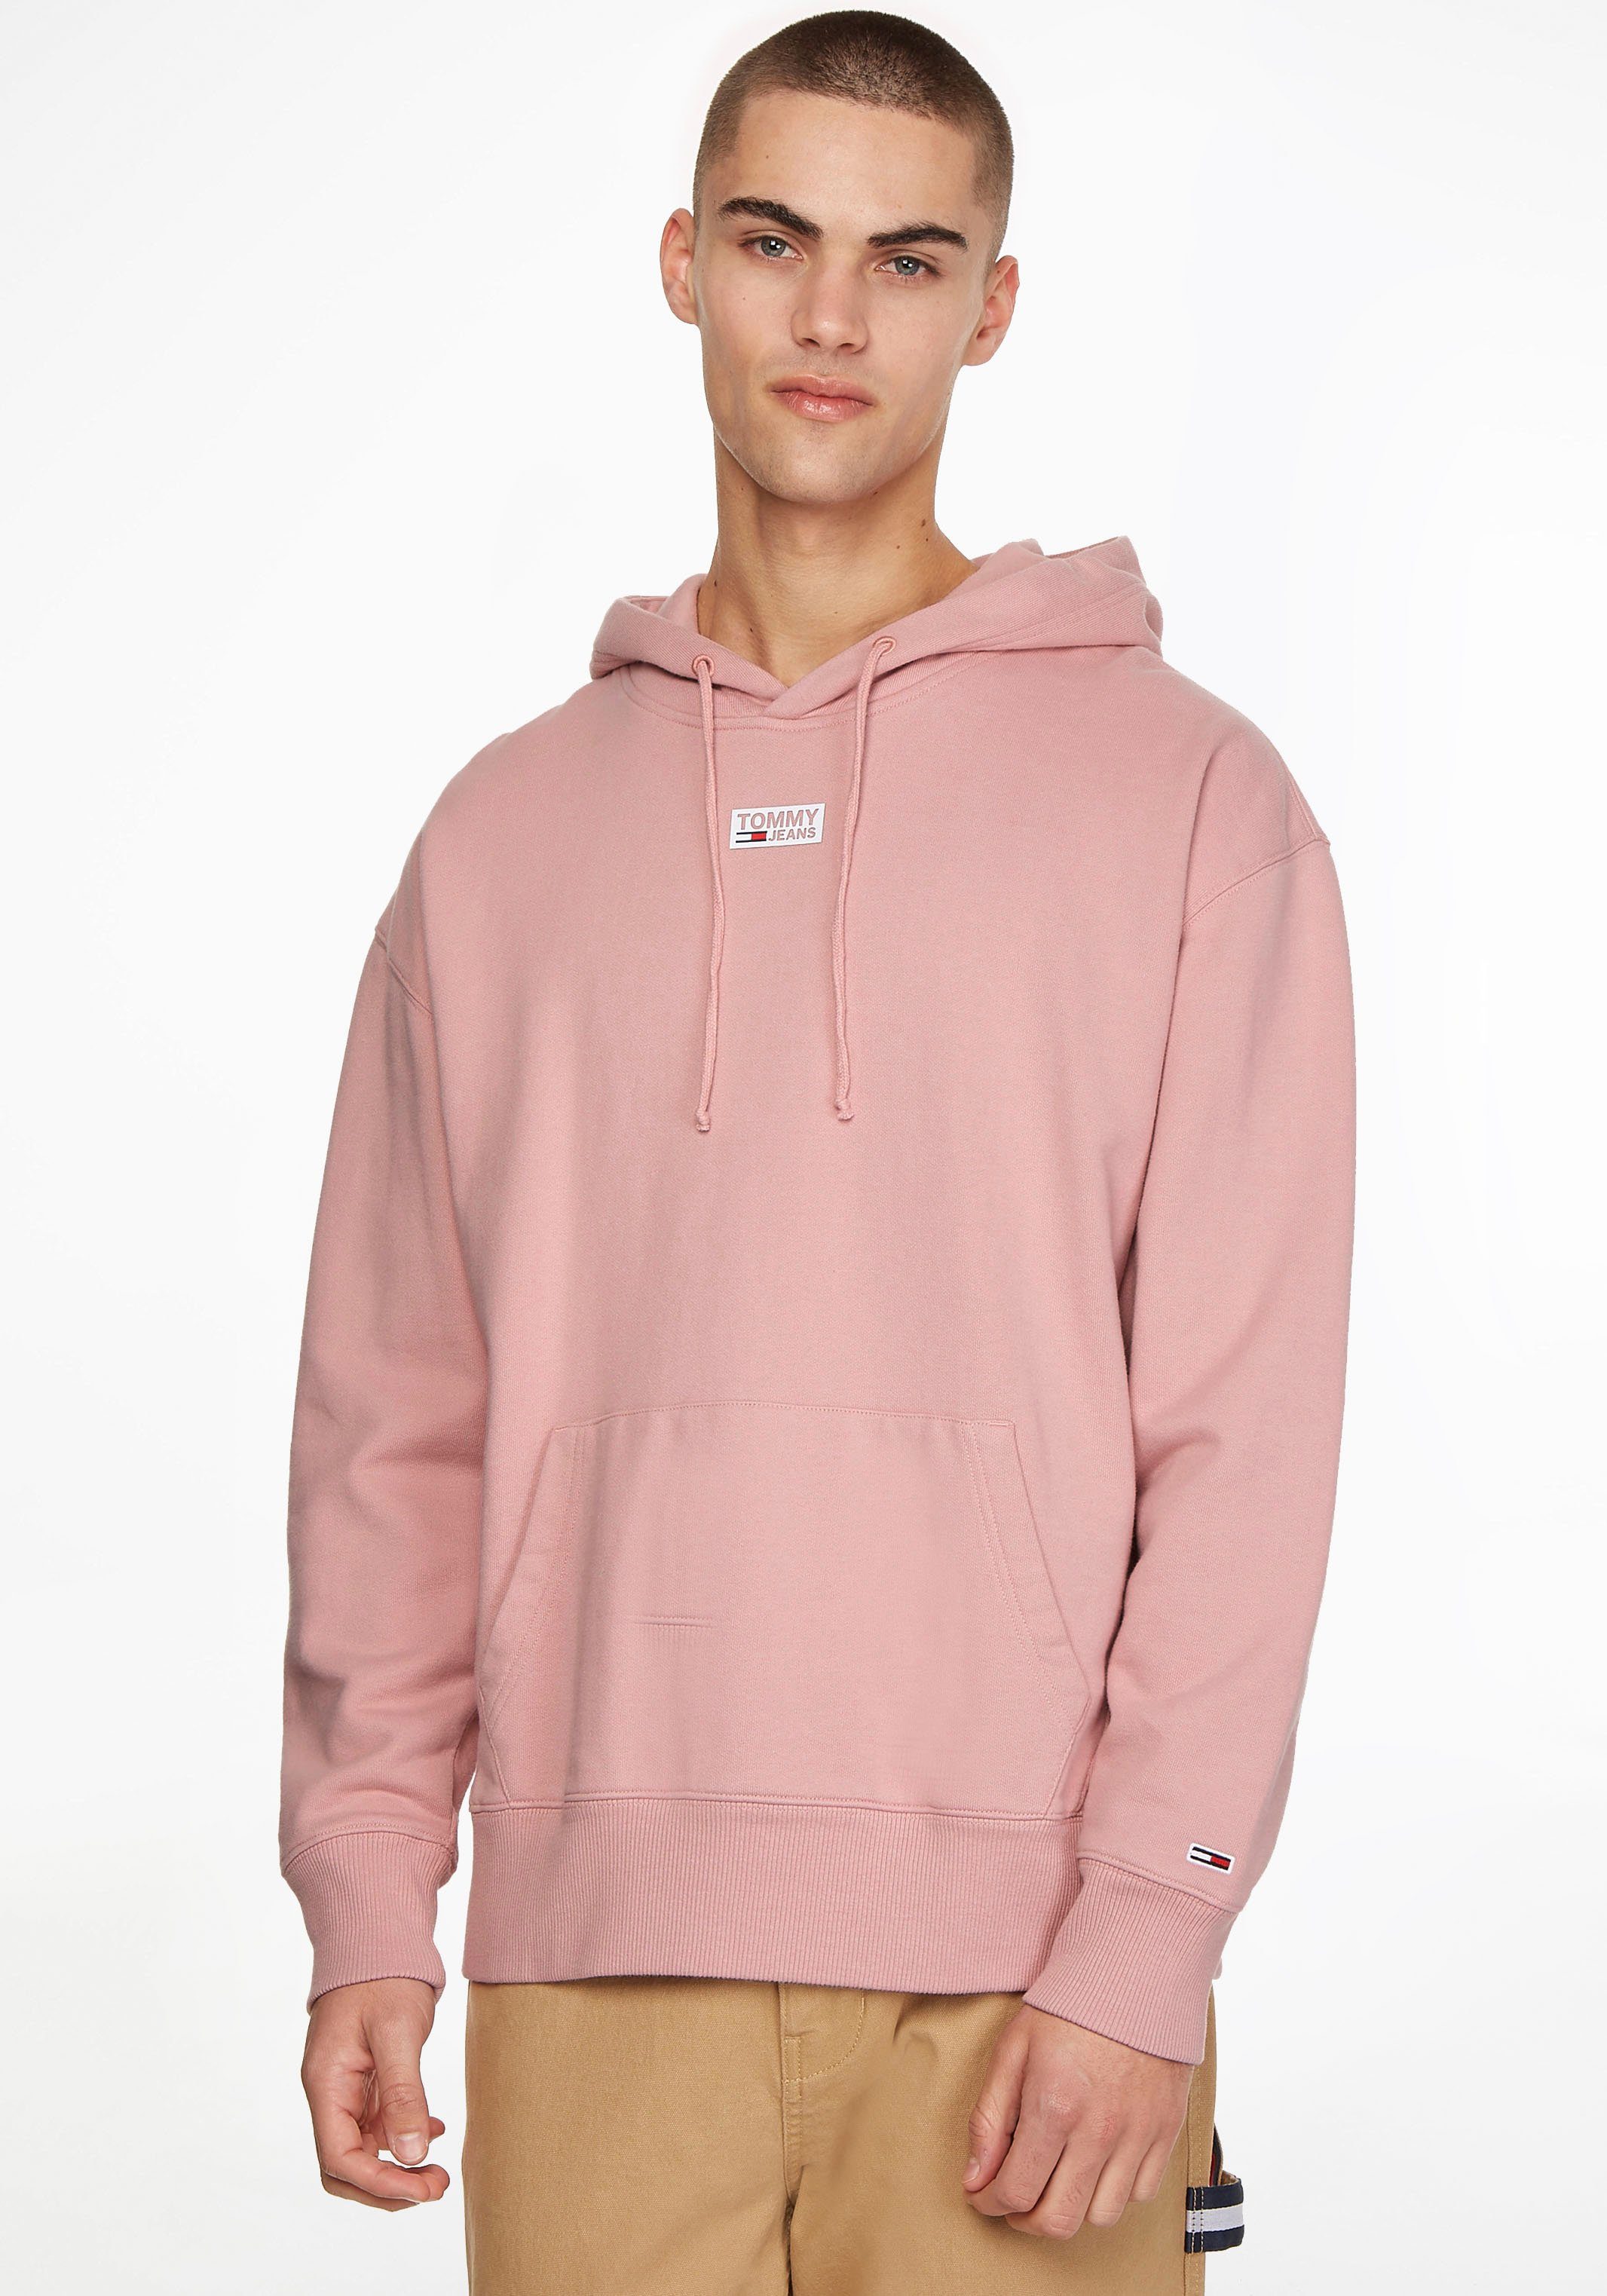 Rosa Herren-Pullover kaufen » Pinker Pullover Herren-| OTTO